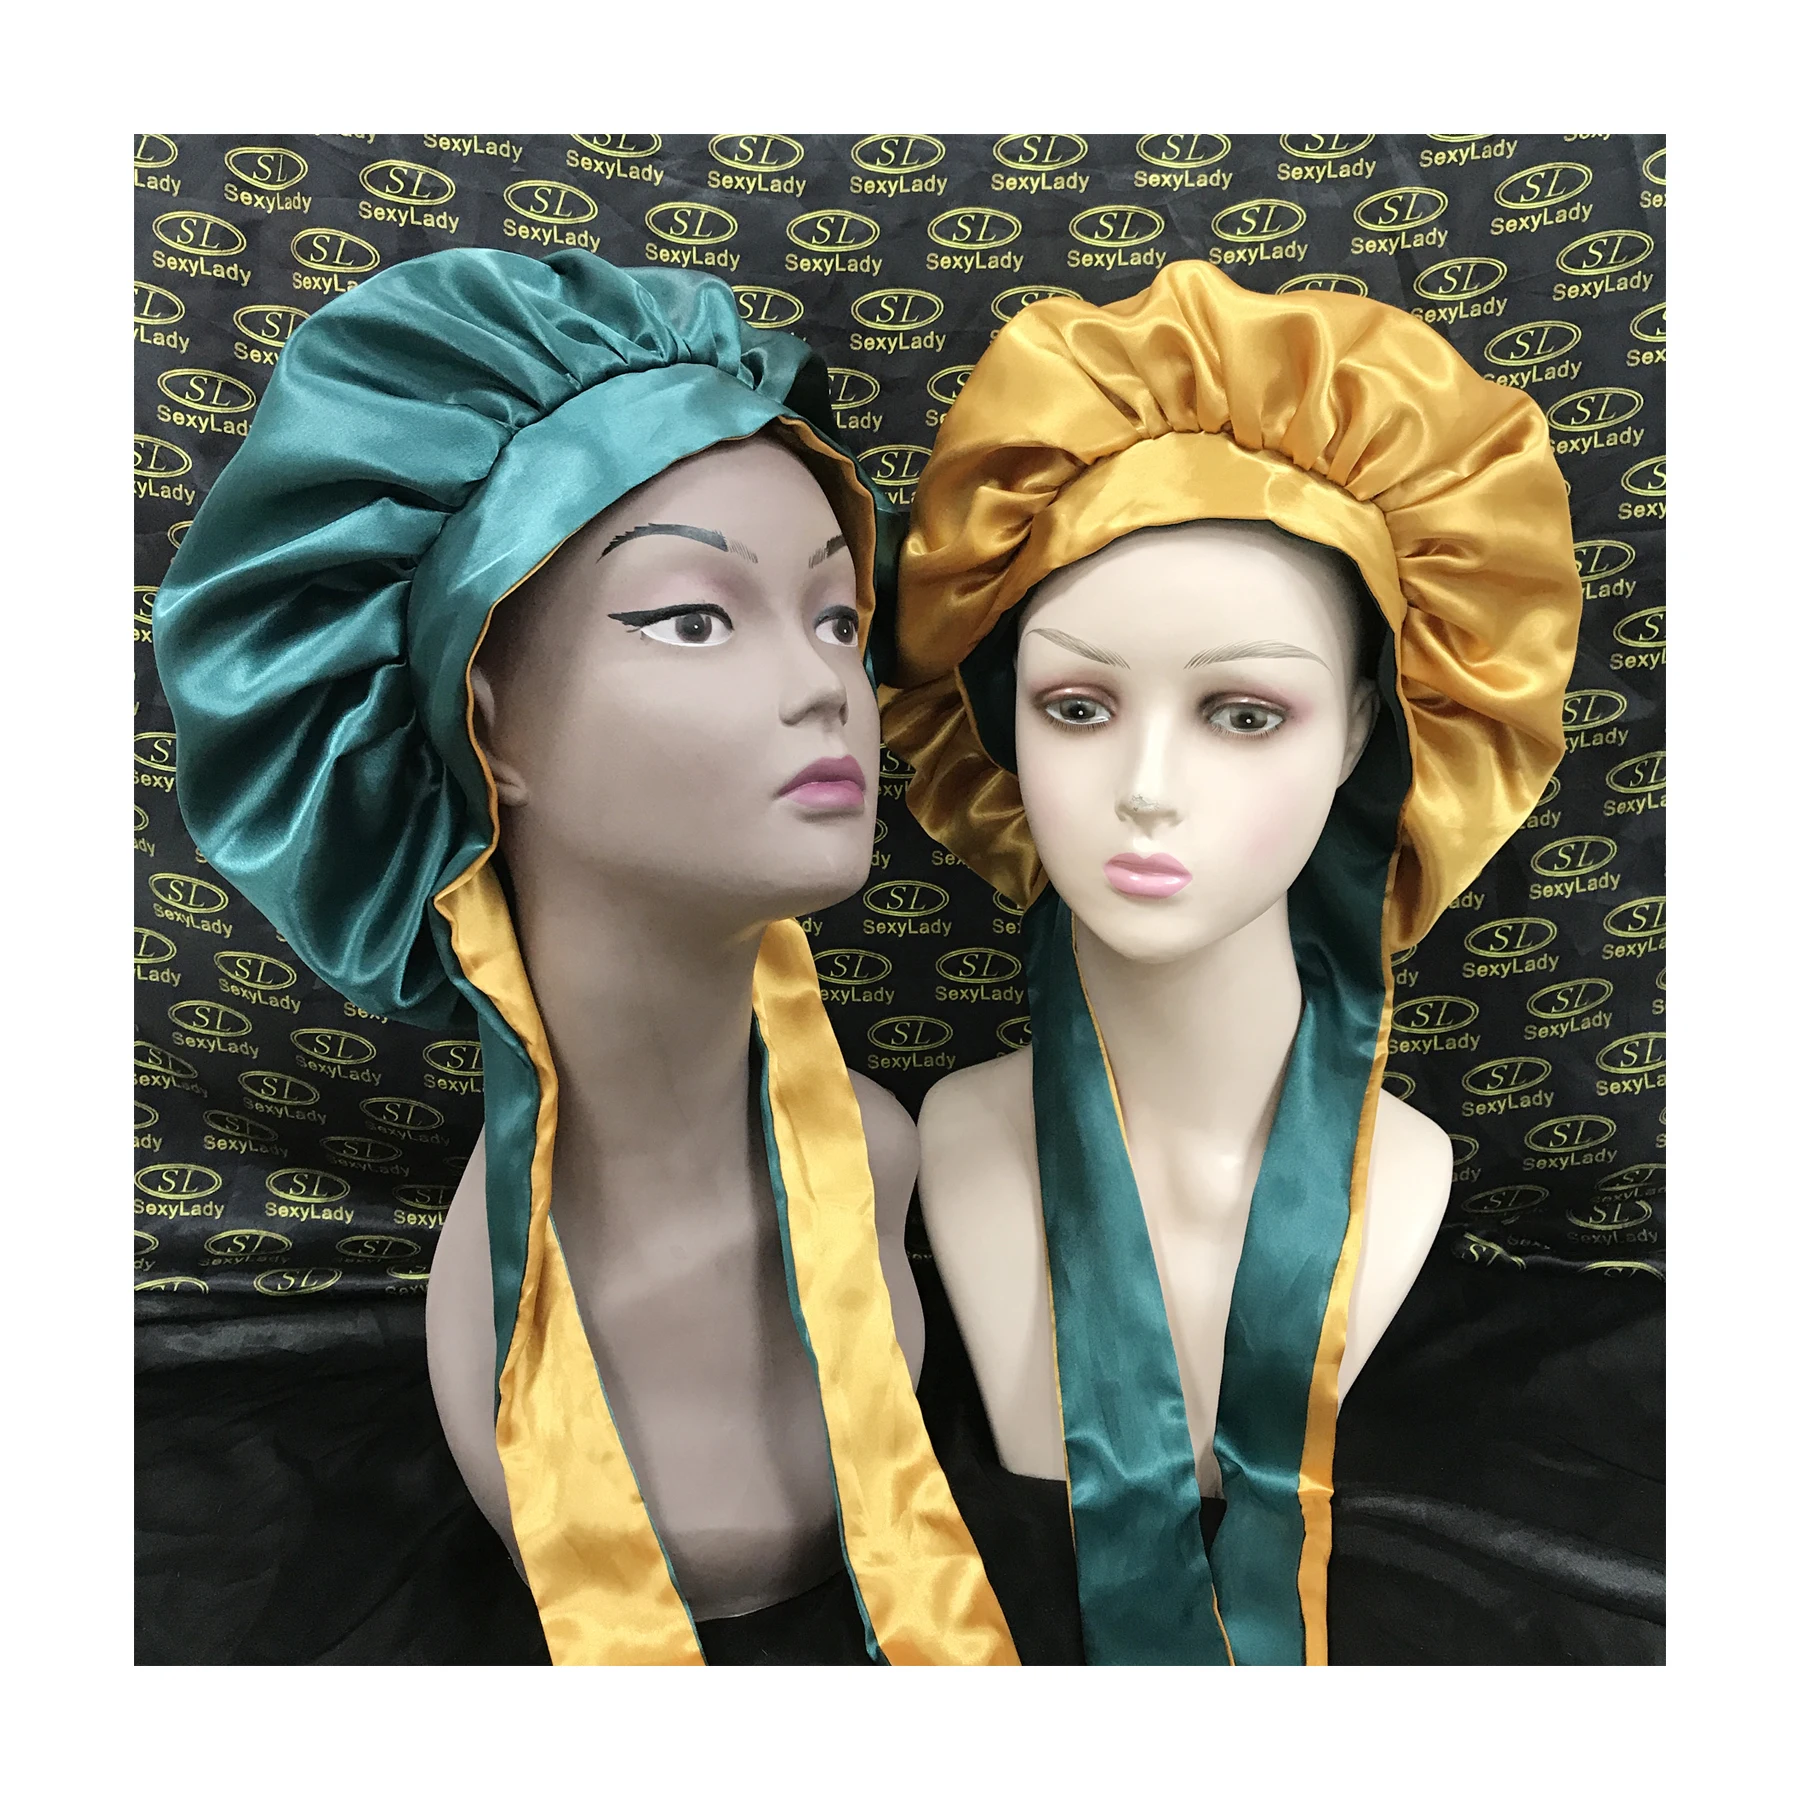 Wholesale Custom Logo Satin Hair Bonnet Double Layer Adjustable